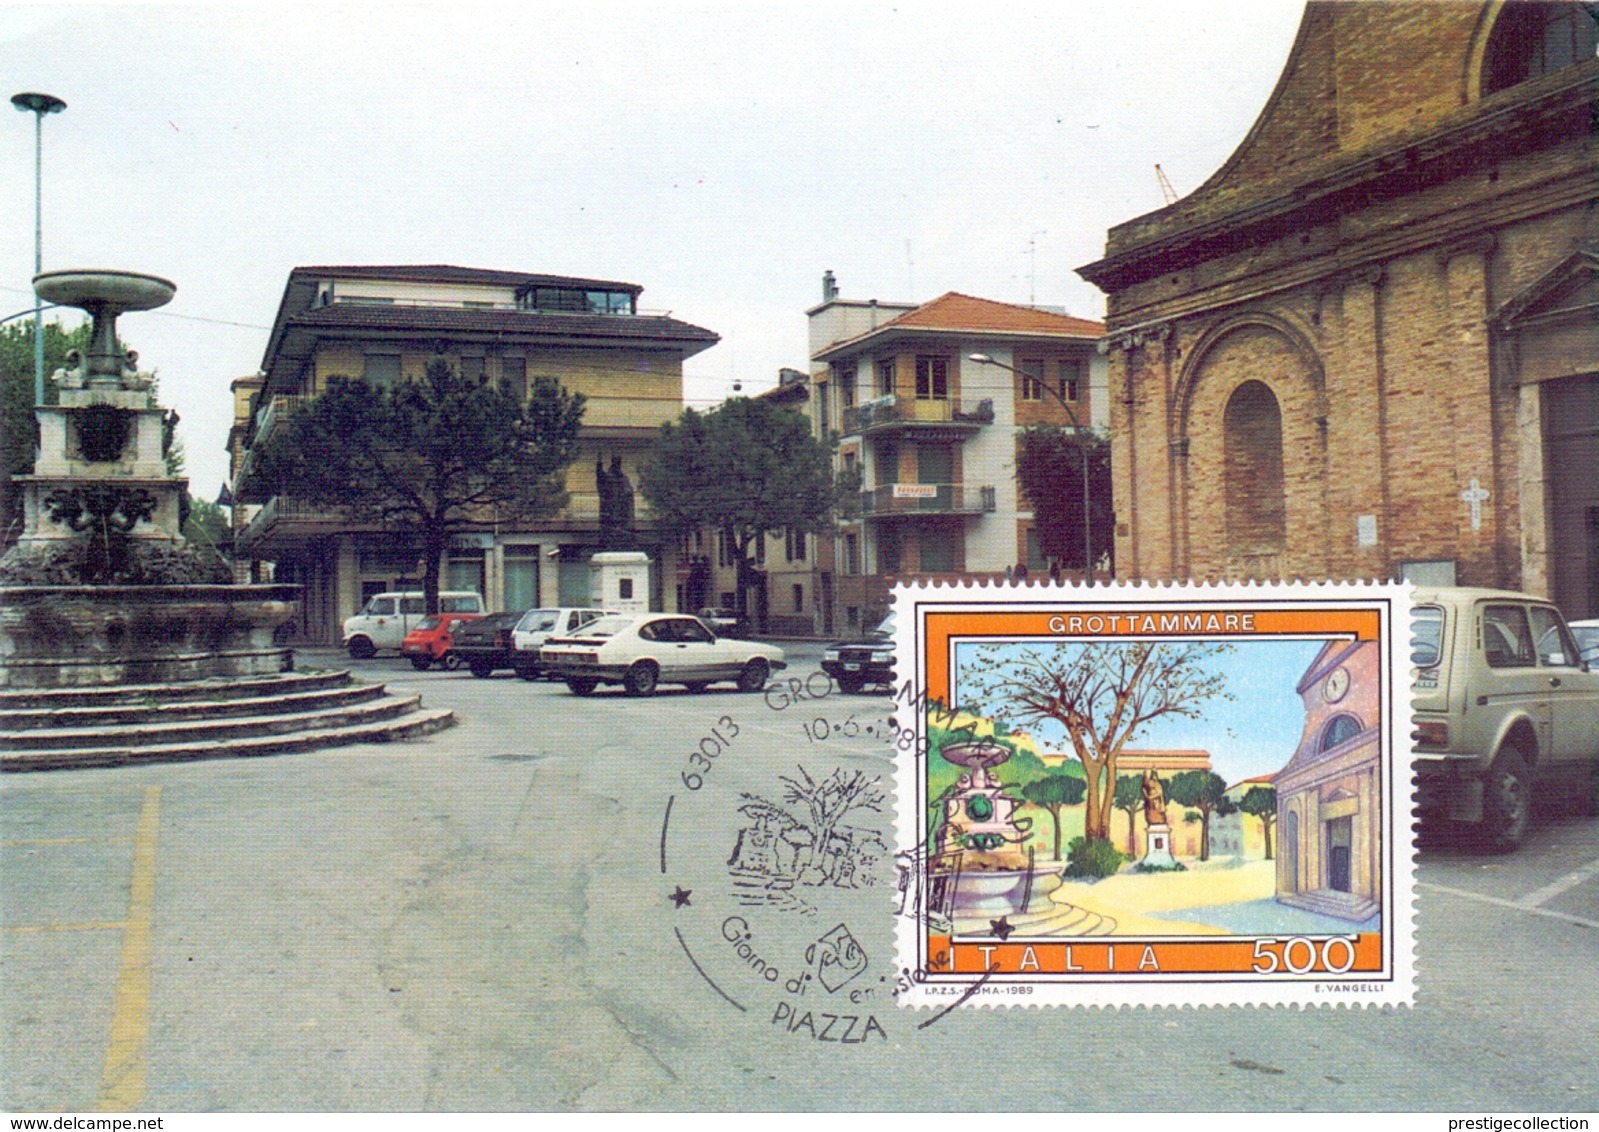 STATUA  GROTTAMMARE PIAZZA S. PIO     1989 MAXIMUM POST CARD (GENN200433) - Monumenti